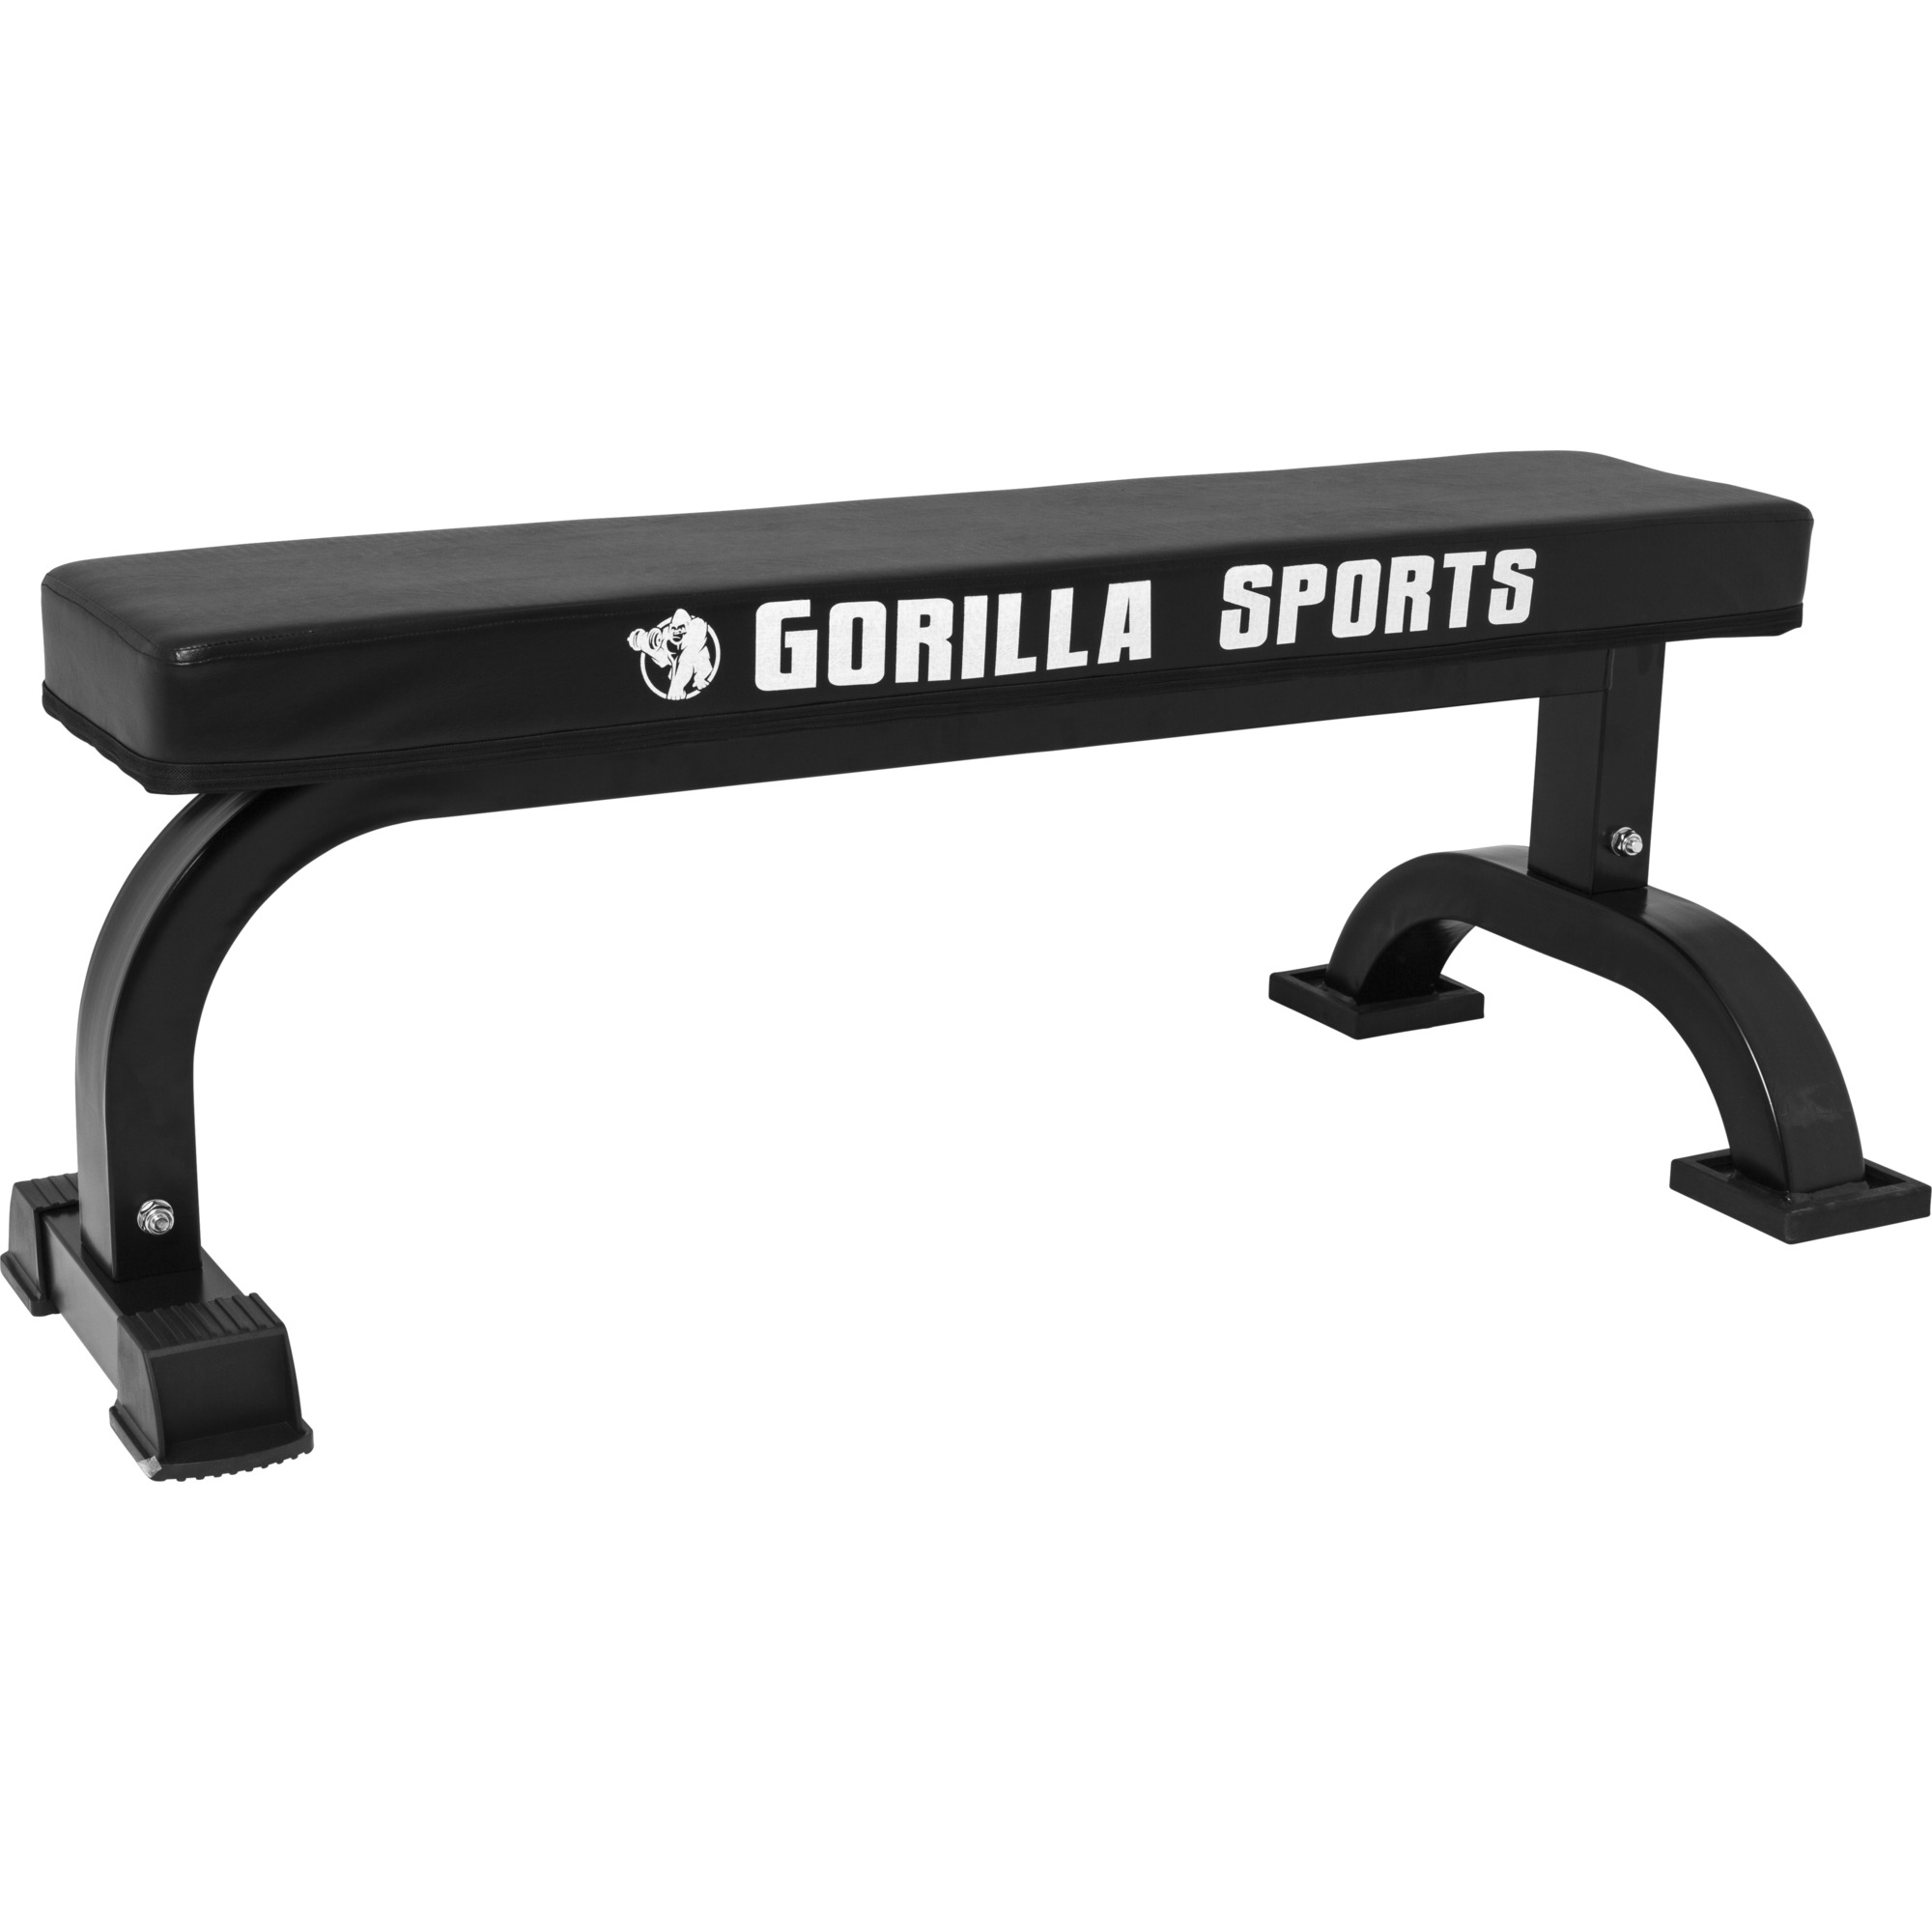 Banc de musculation plat avec logo Gorilla Sports, noir